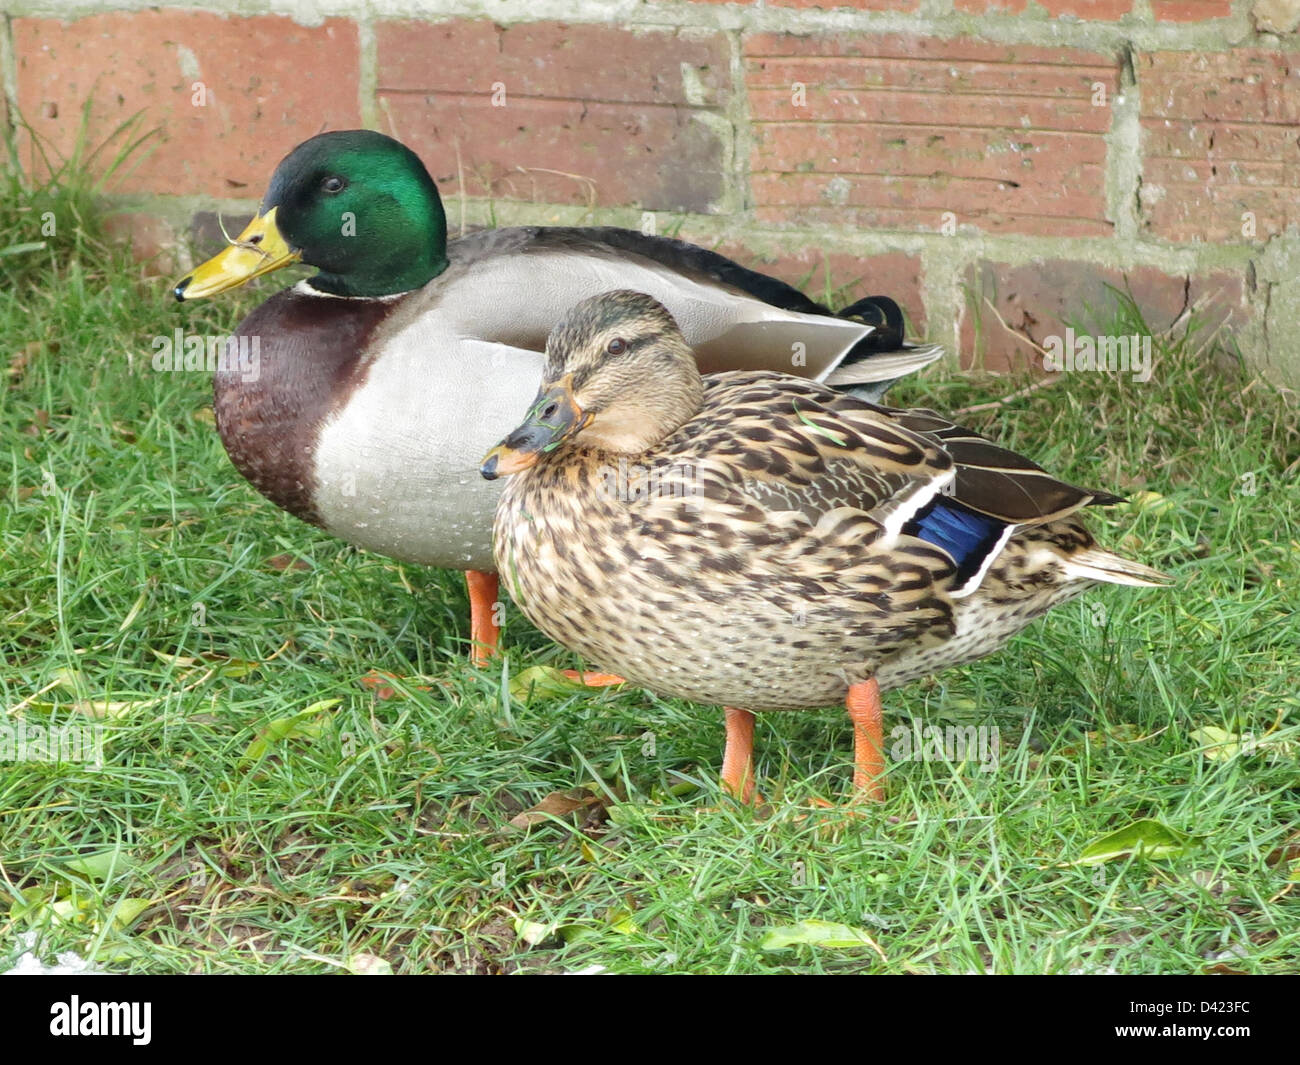 Two Ducks in Surrey Jan 2013 Stock Photo